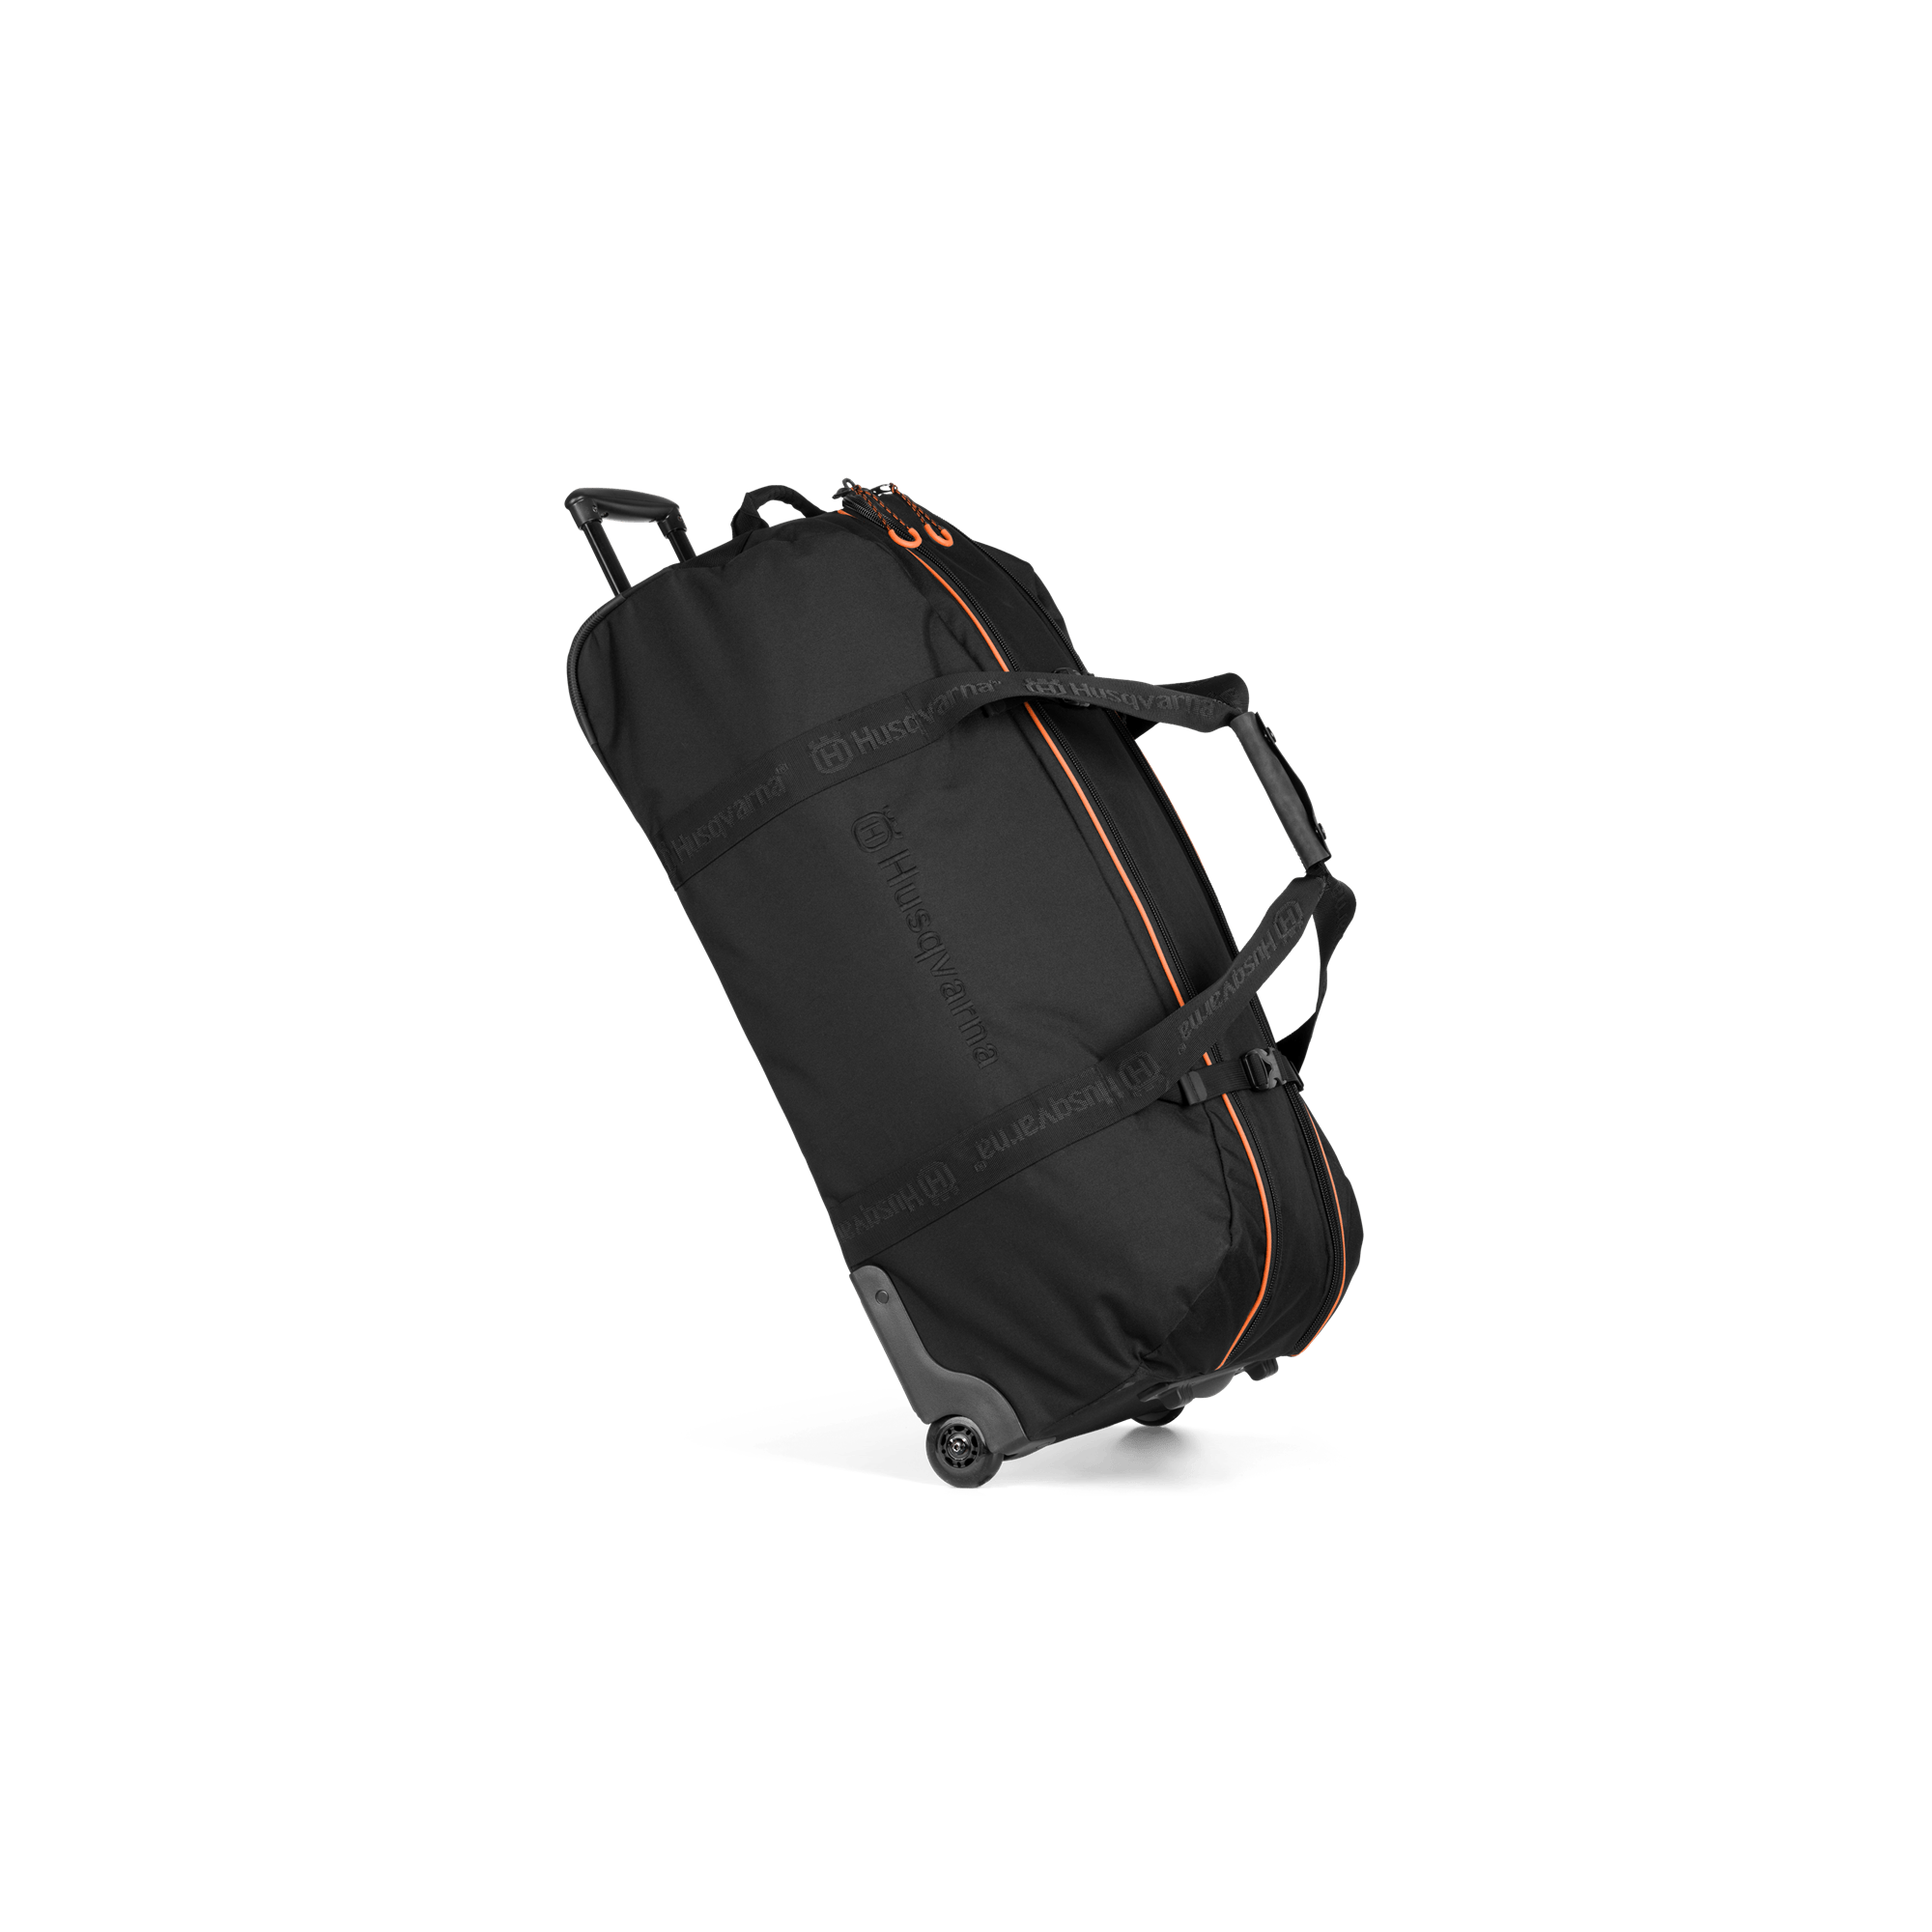 Image for Xplorer Trolley Bag                                                                                                              from HusqvarnaB2C